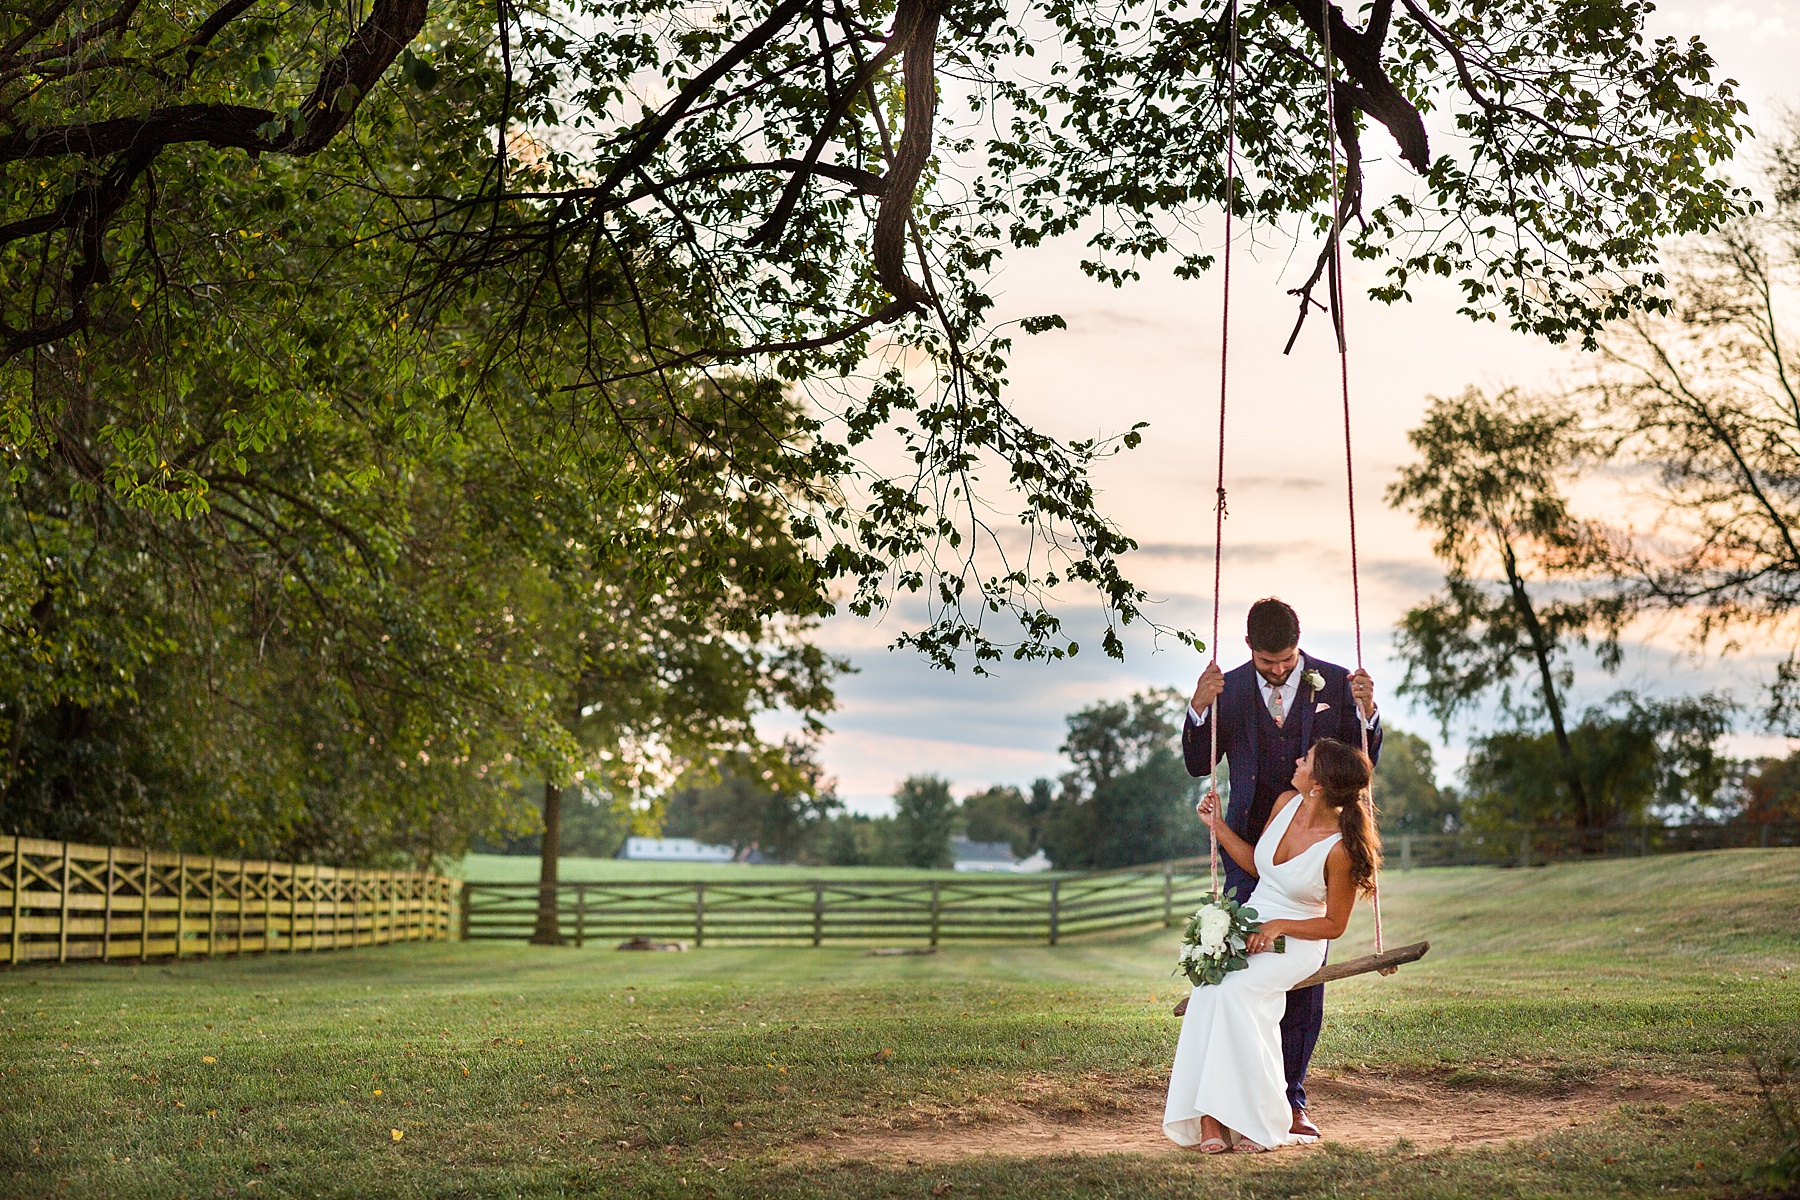 Alexandra Mandato Photography photographs wedding portraits on swing at Walker's Overlook